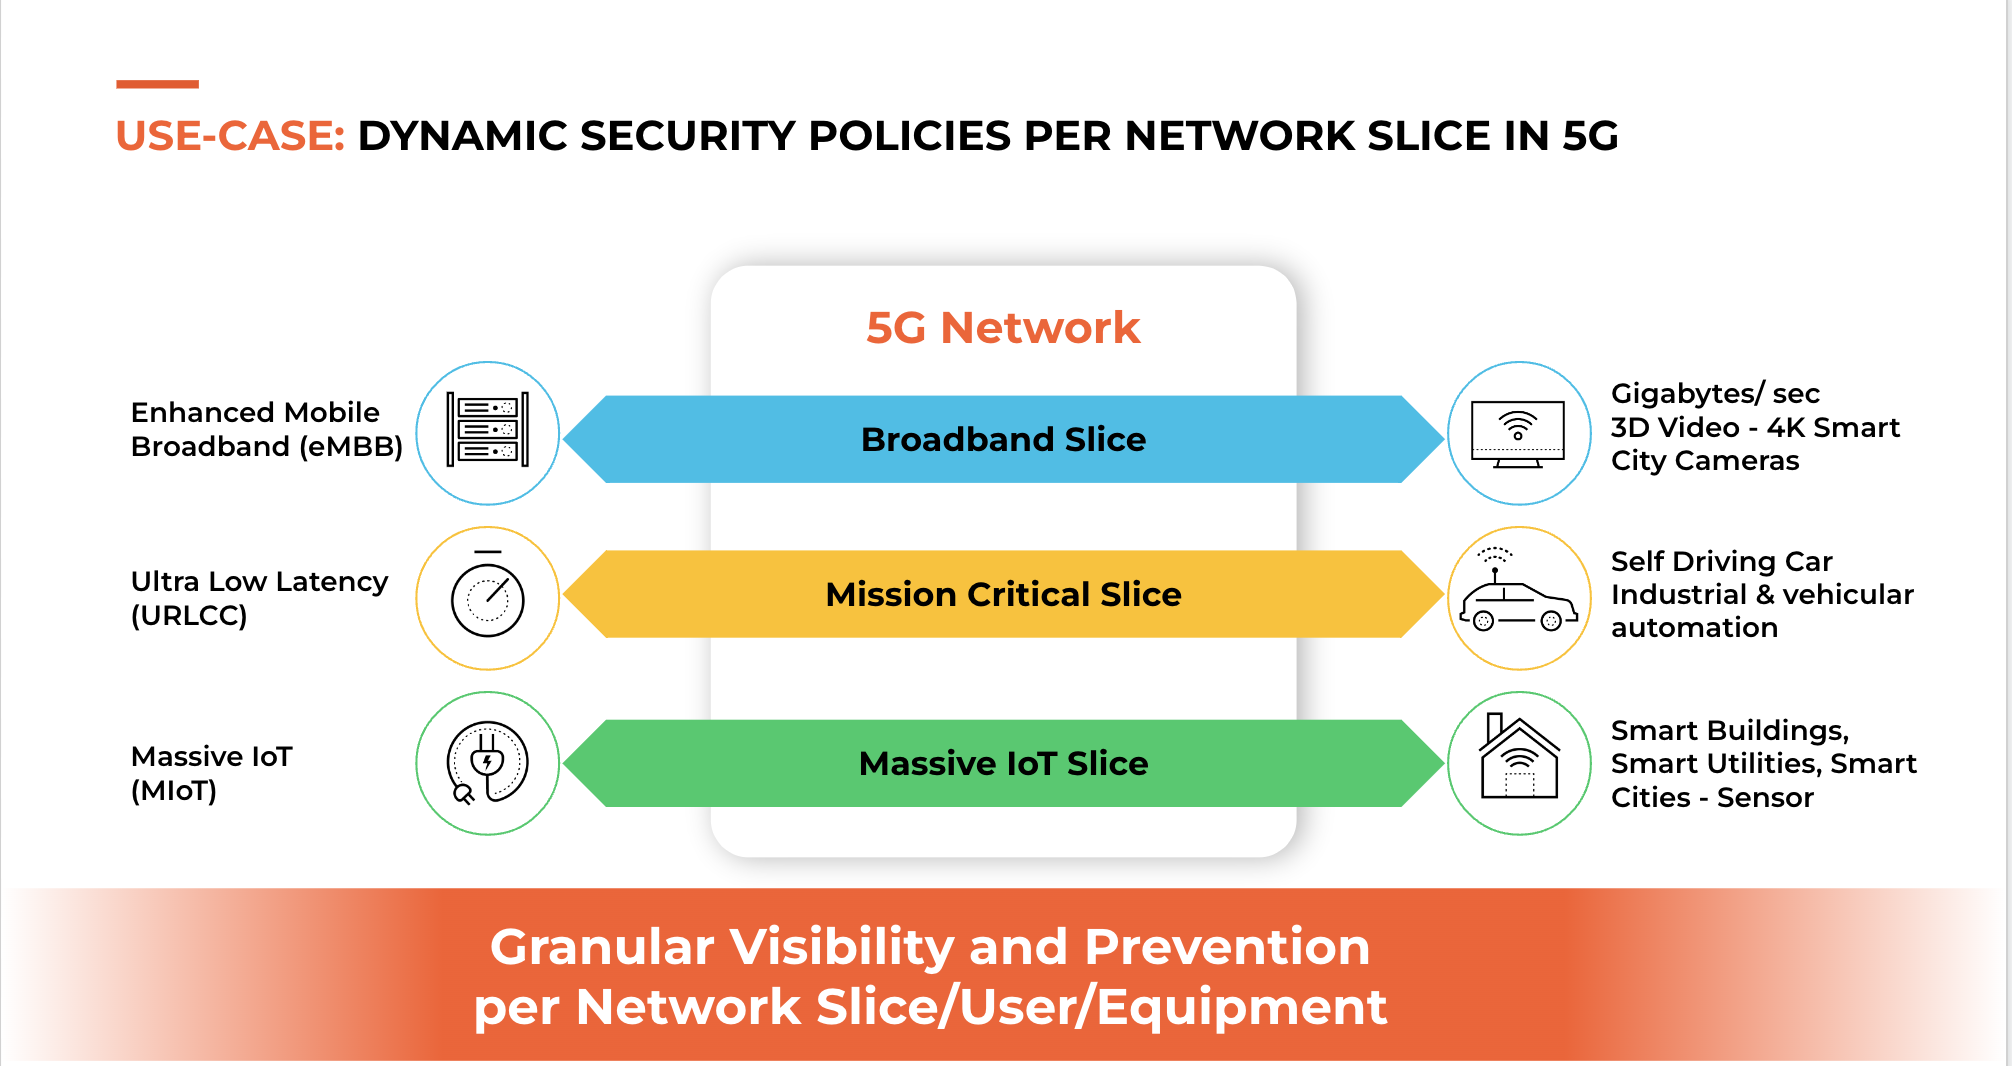 Granular visibility and prevention per network slice/user/equipment. 